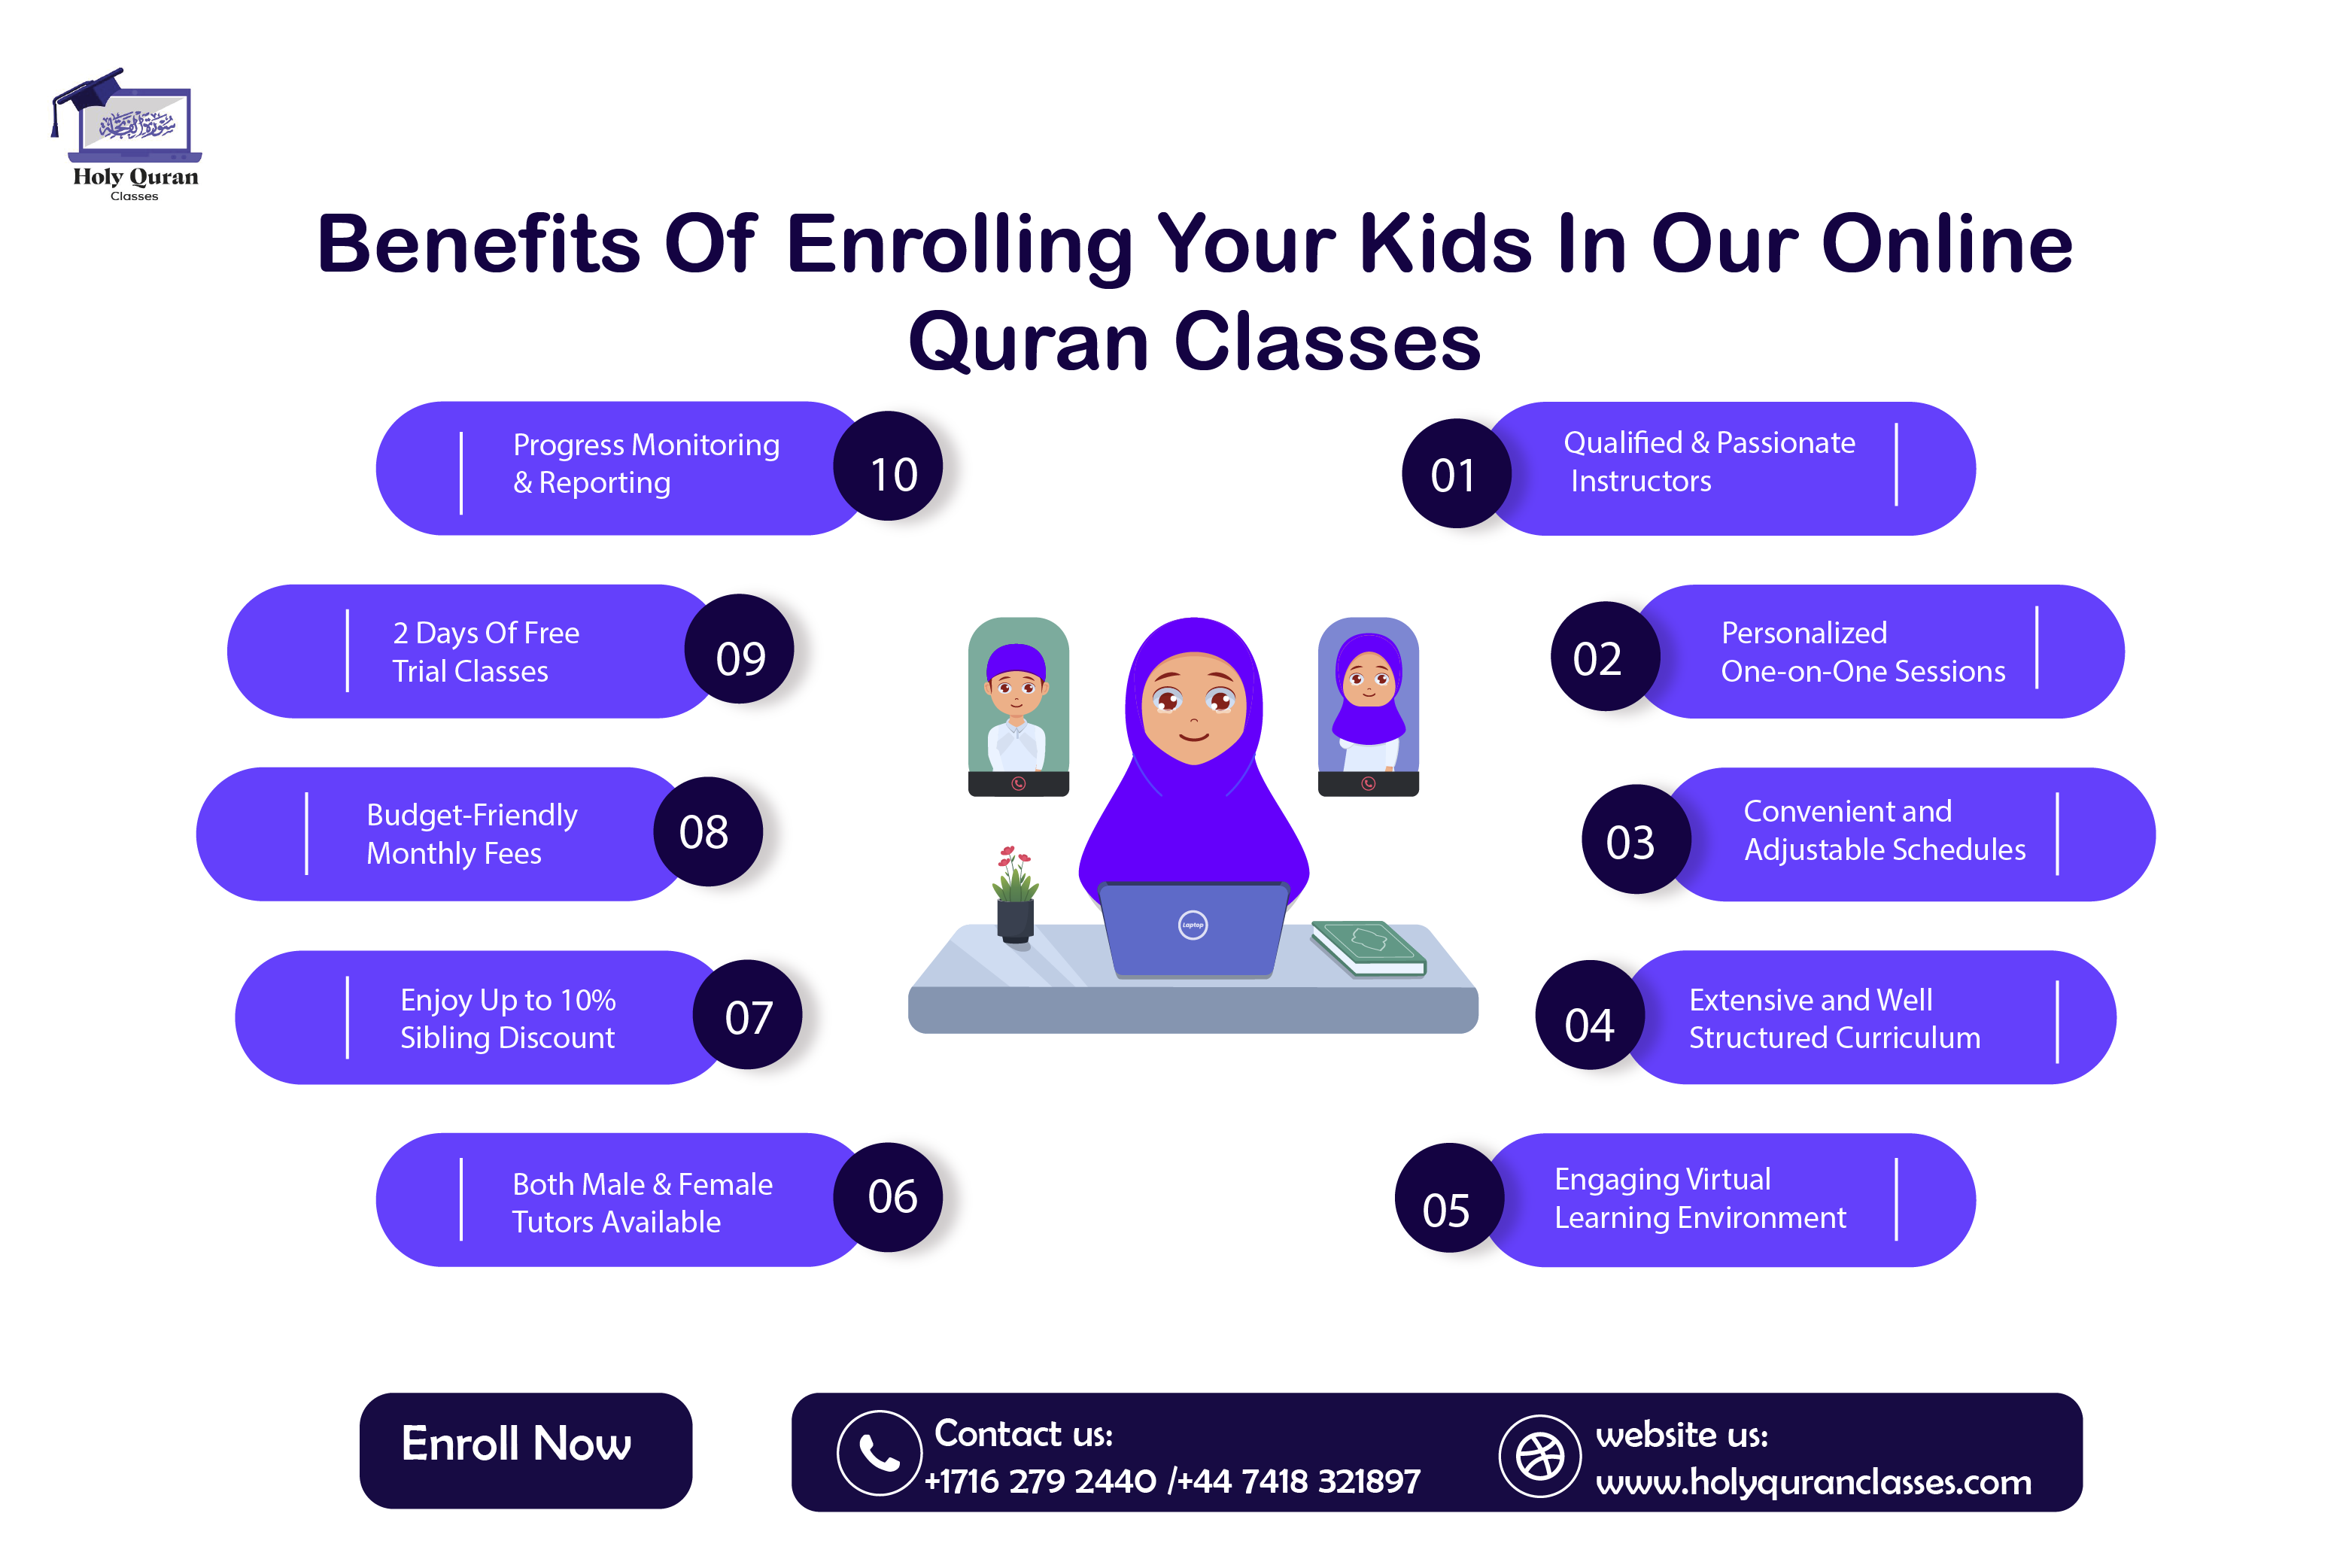 online quran classes for kids